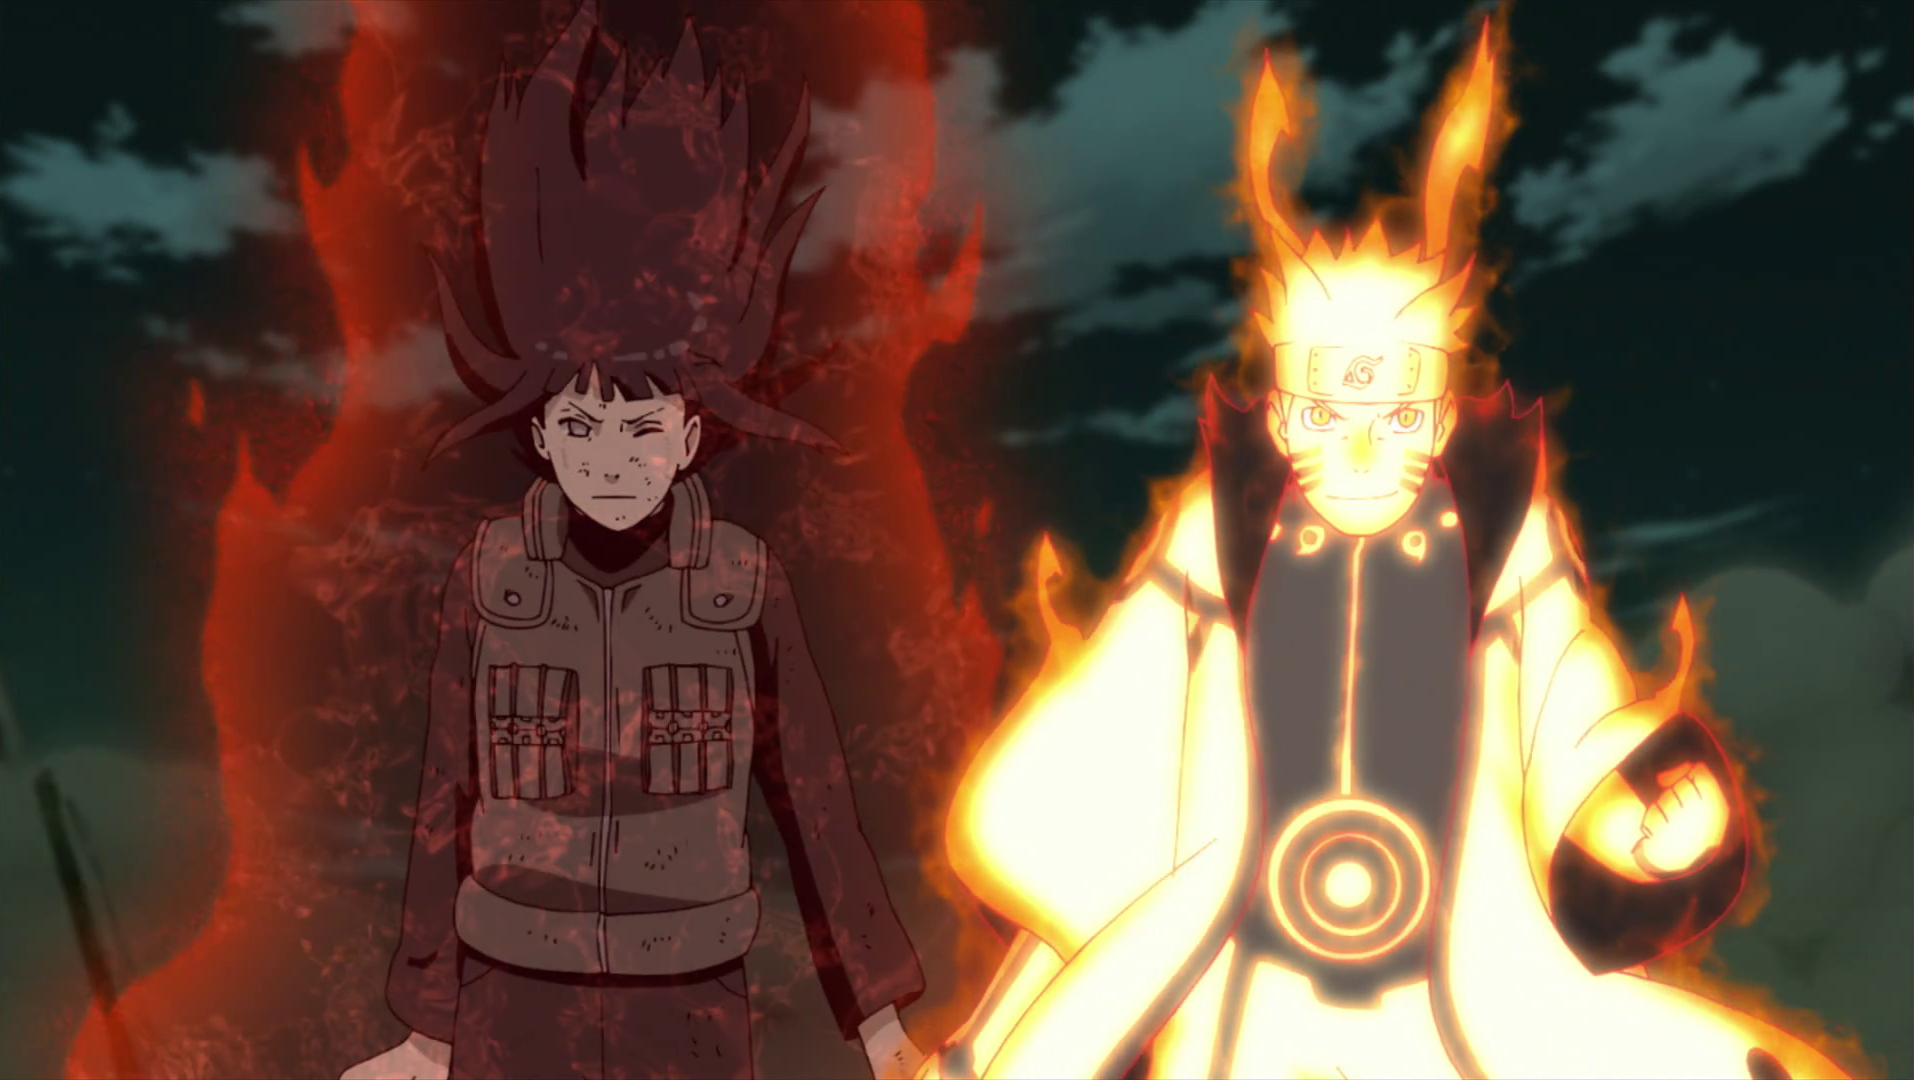 Boruto Movie Clip: Naruto's Sacrifice., By Hinata Hyuga